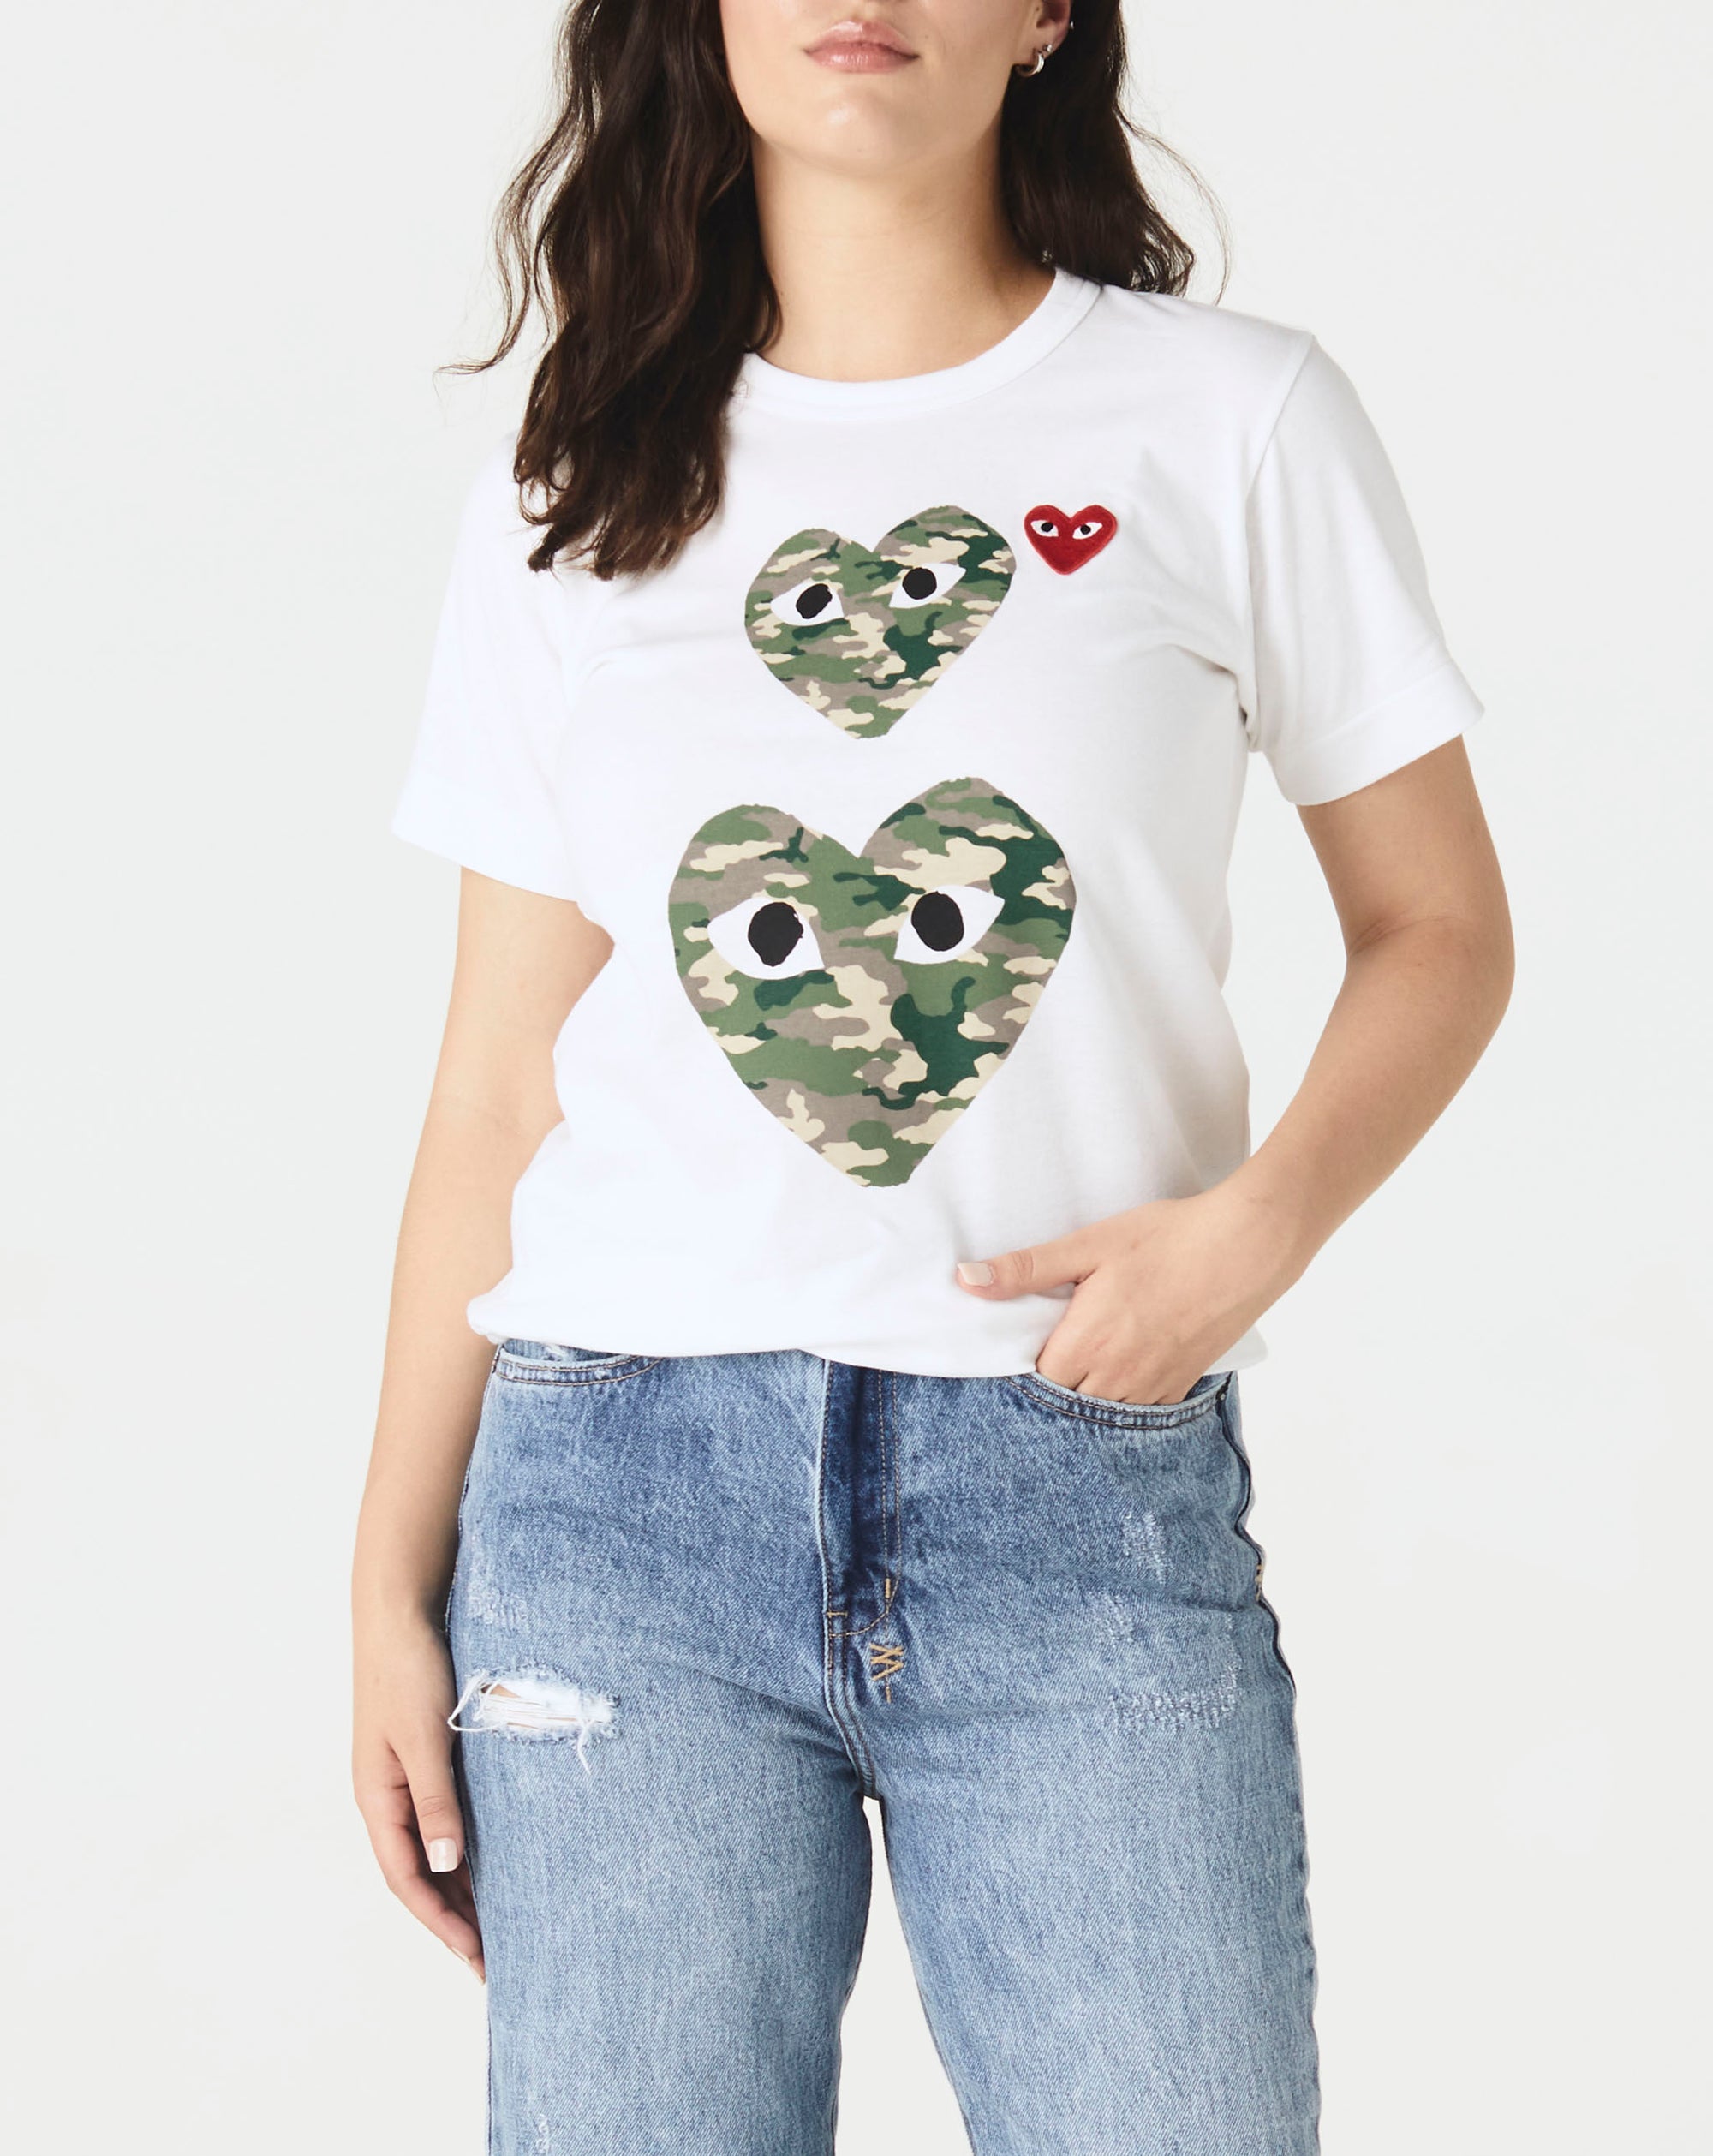 Comme des Garcons PLAY Women's Double Camo Heart T-Shirt - Rule of Next Apparel